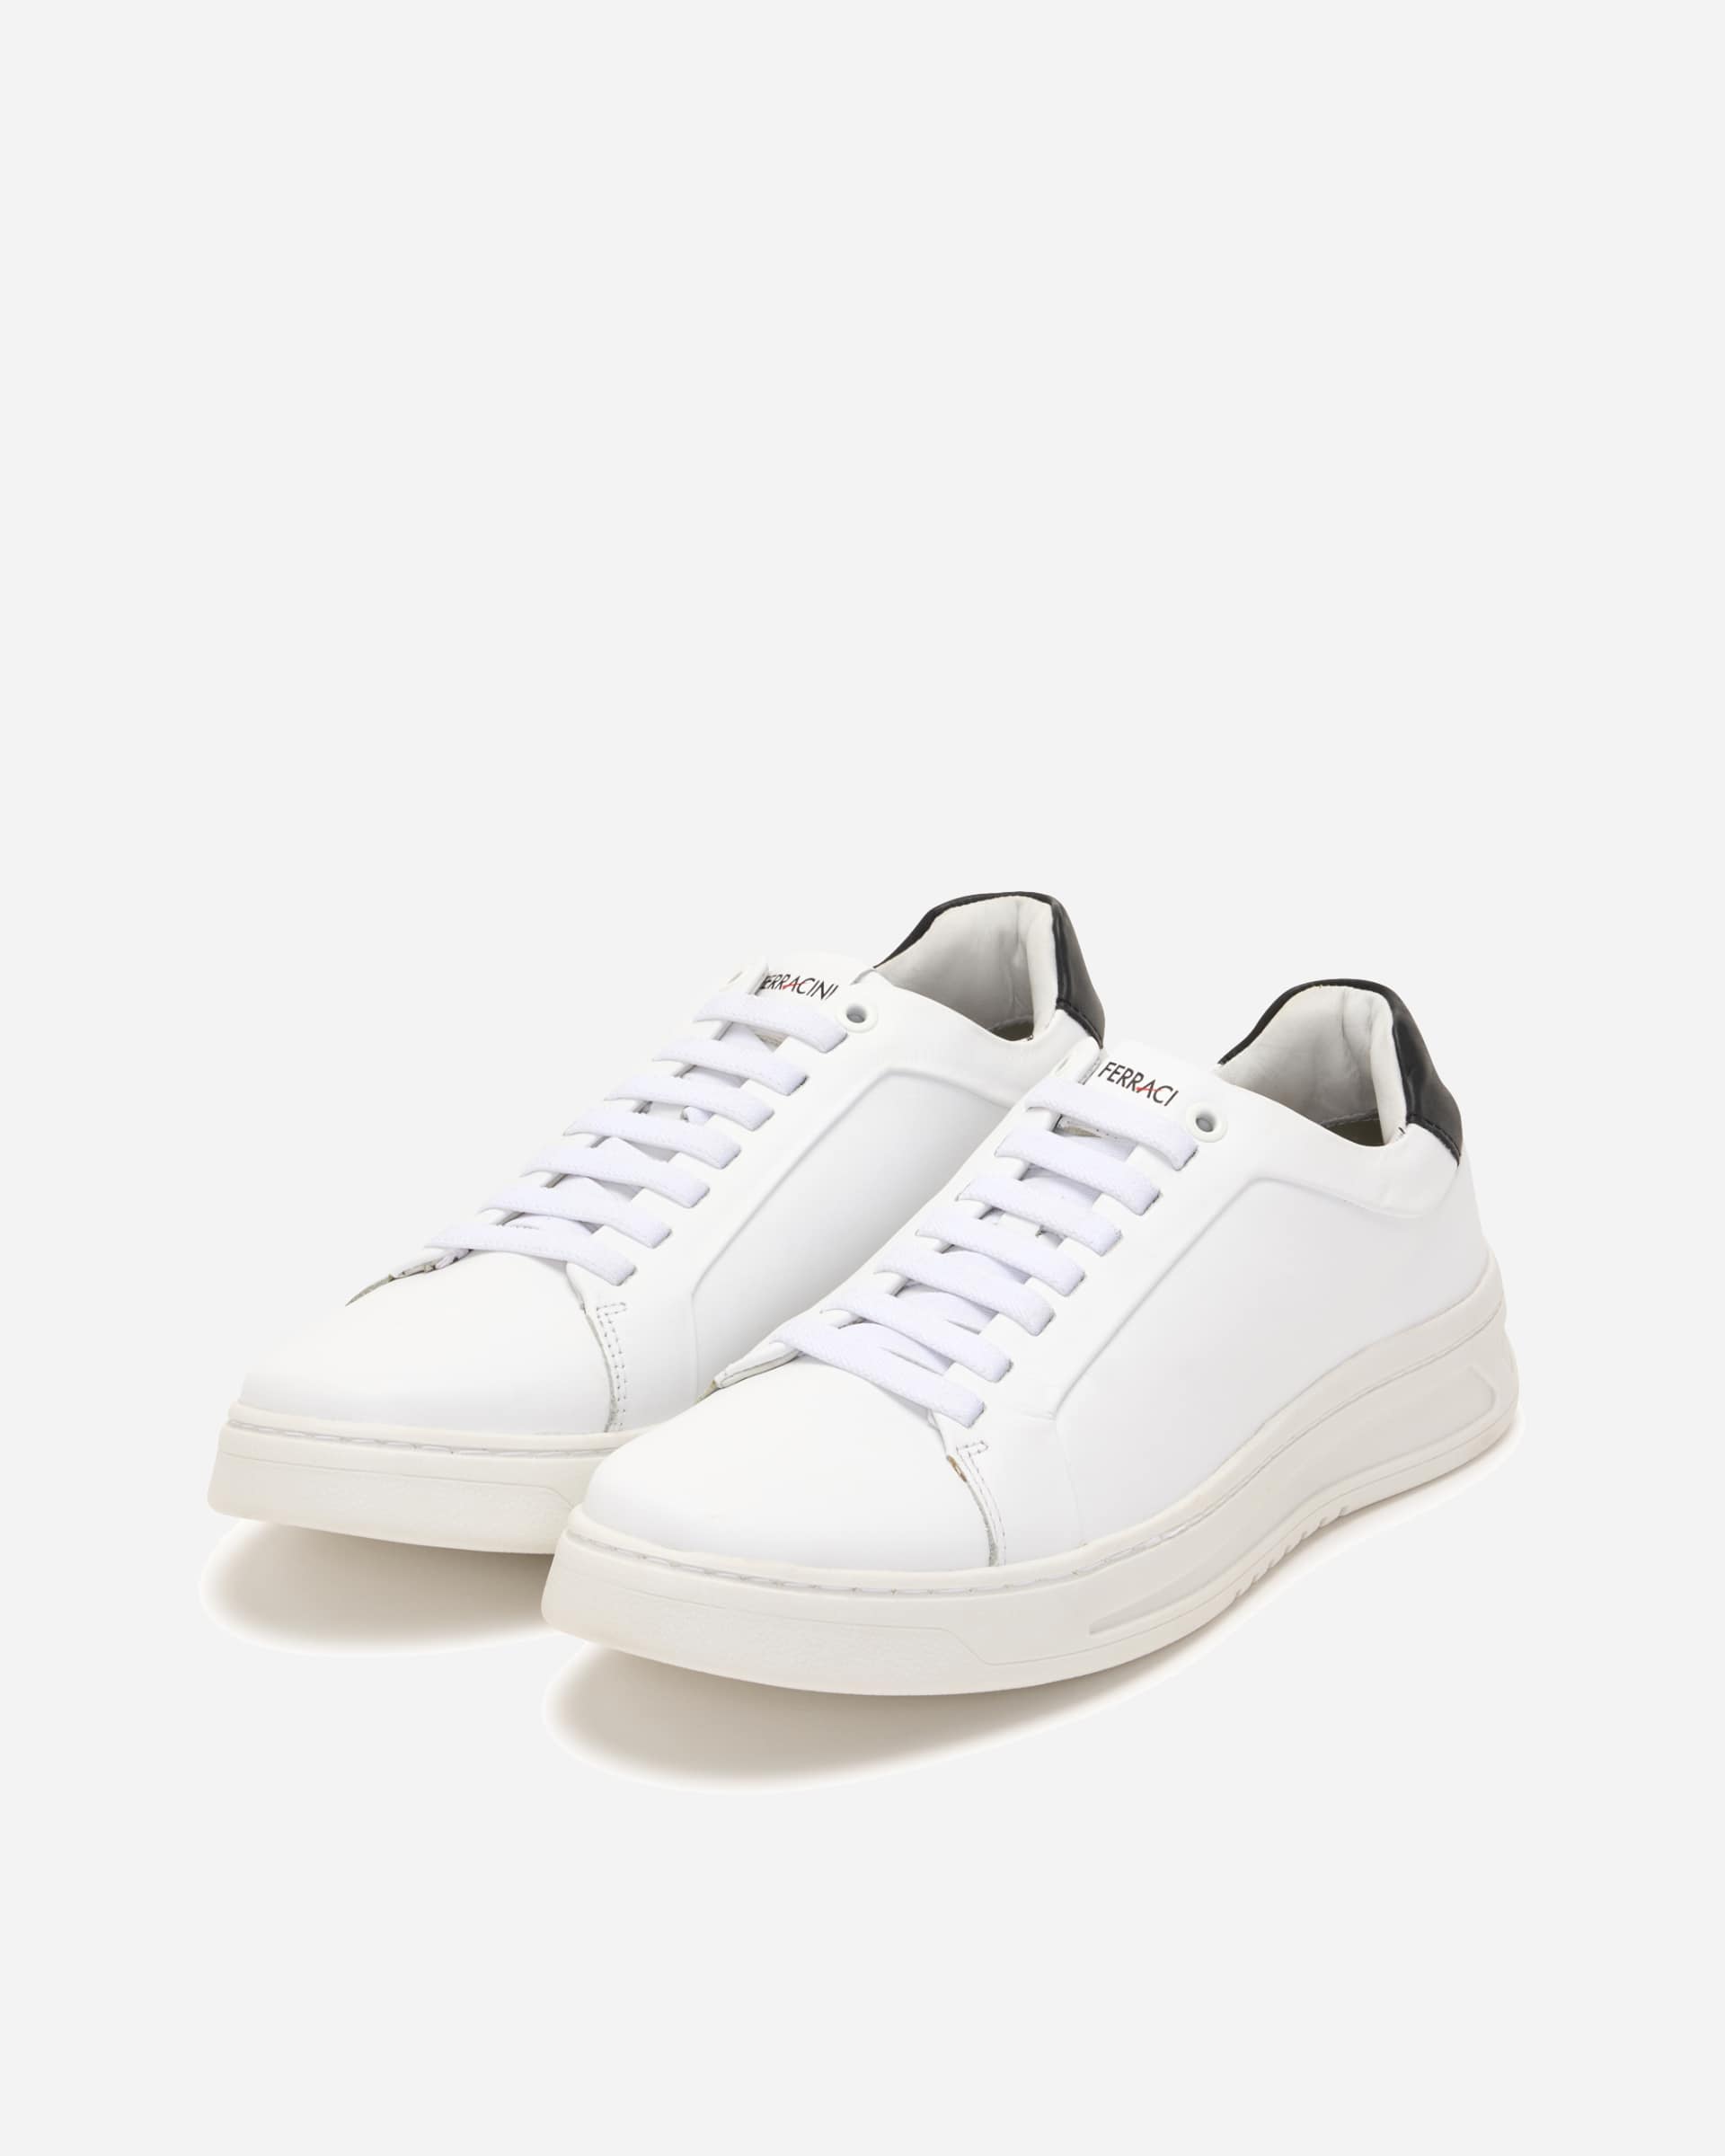 Ubaldo White Sneaker - Men's Shoes at Menzclub